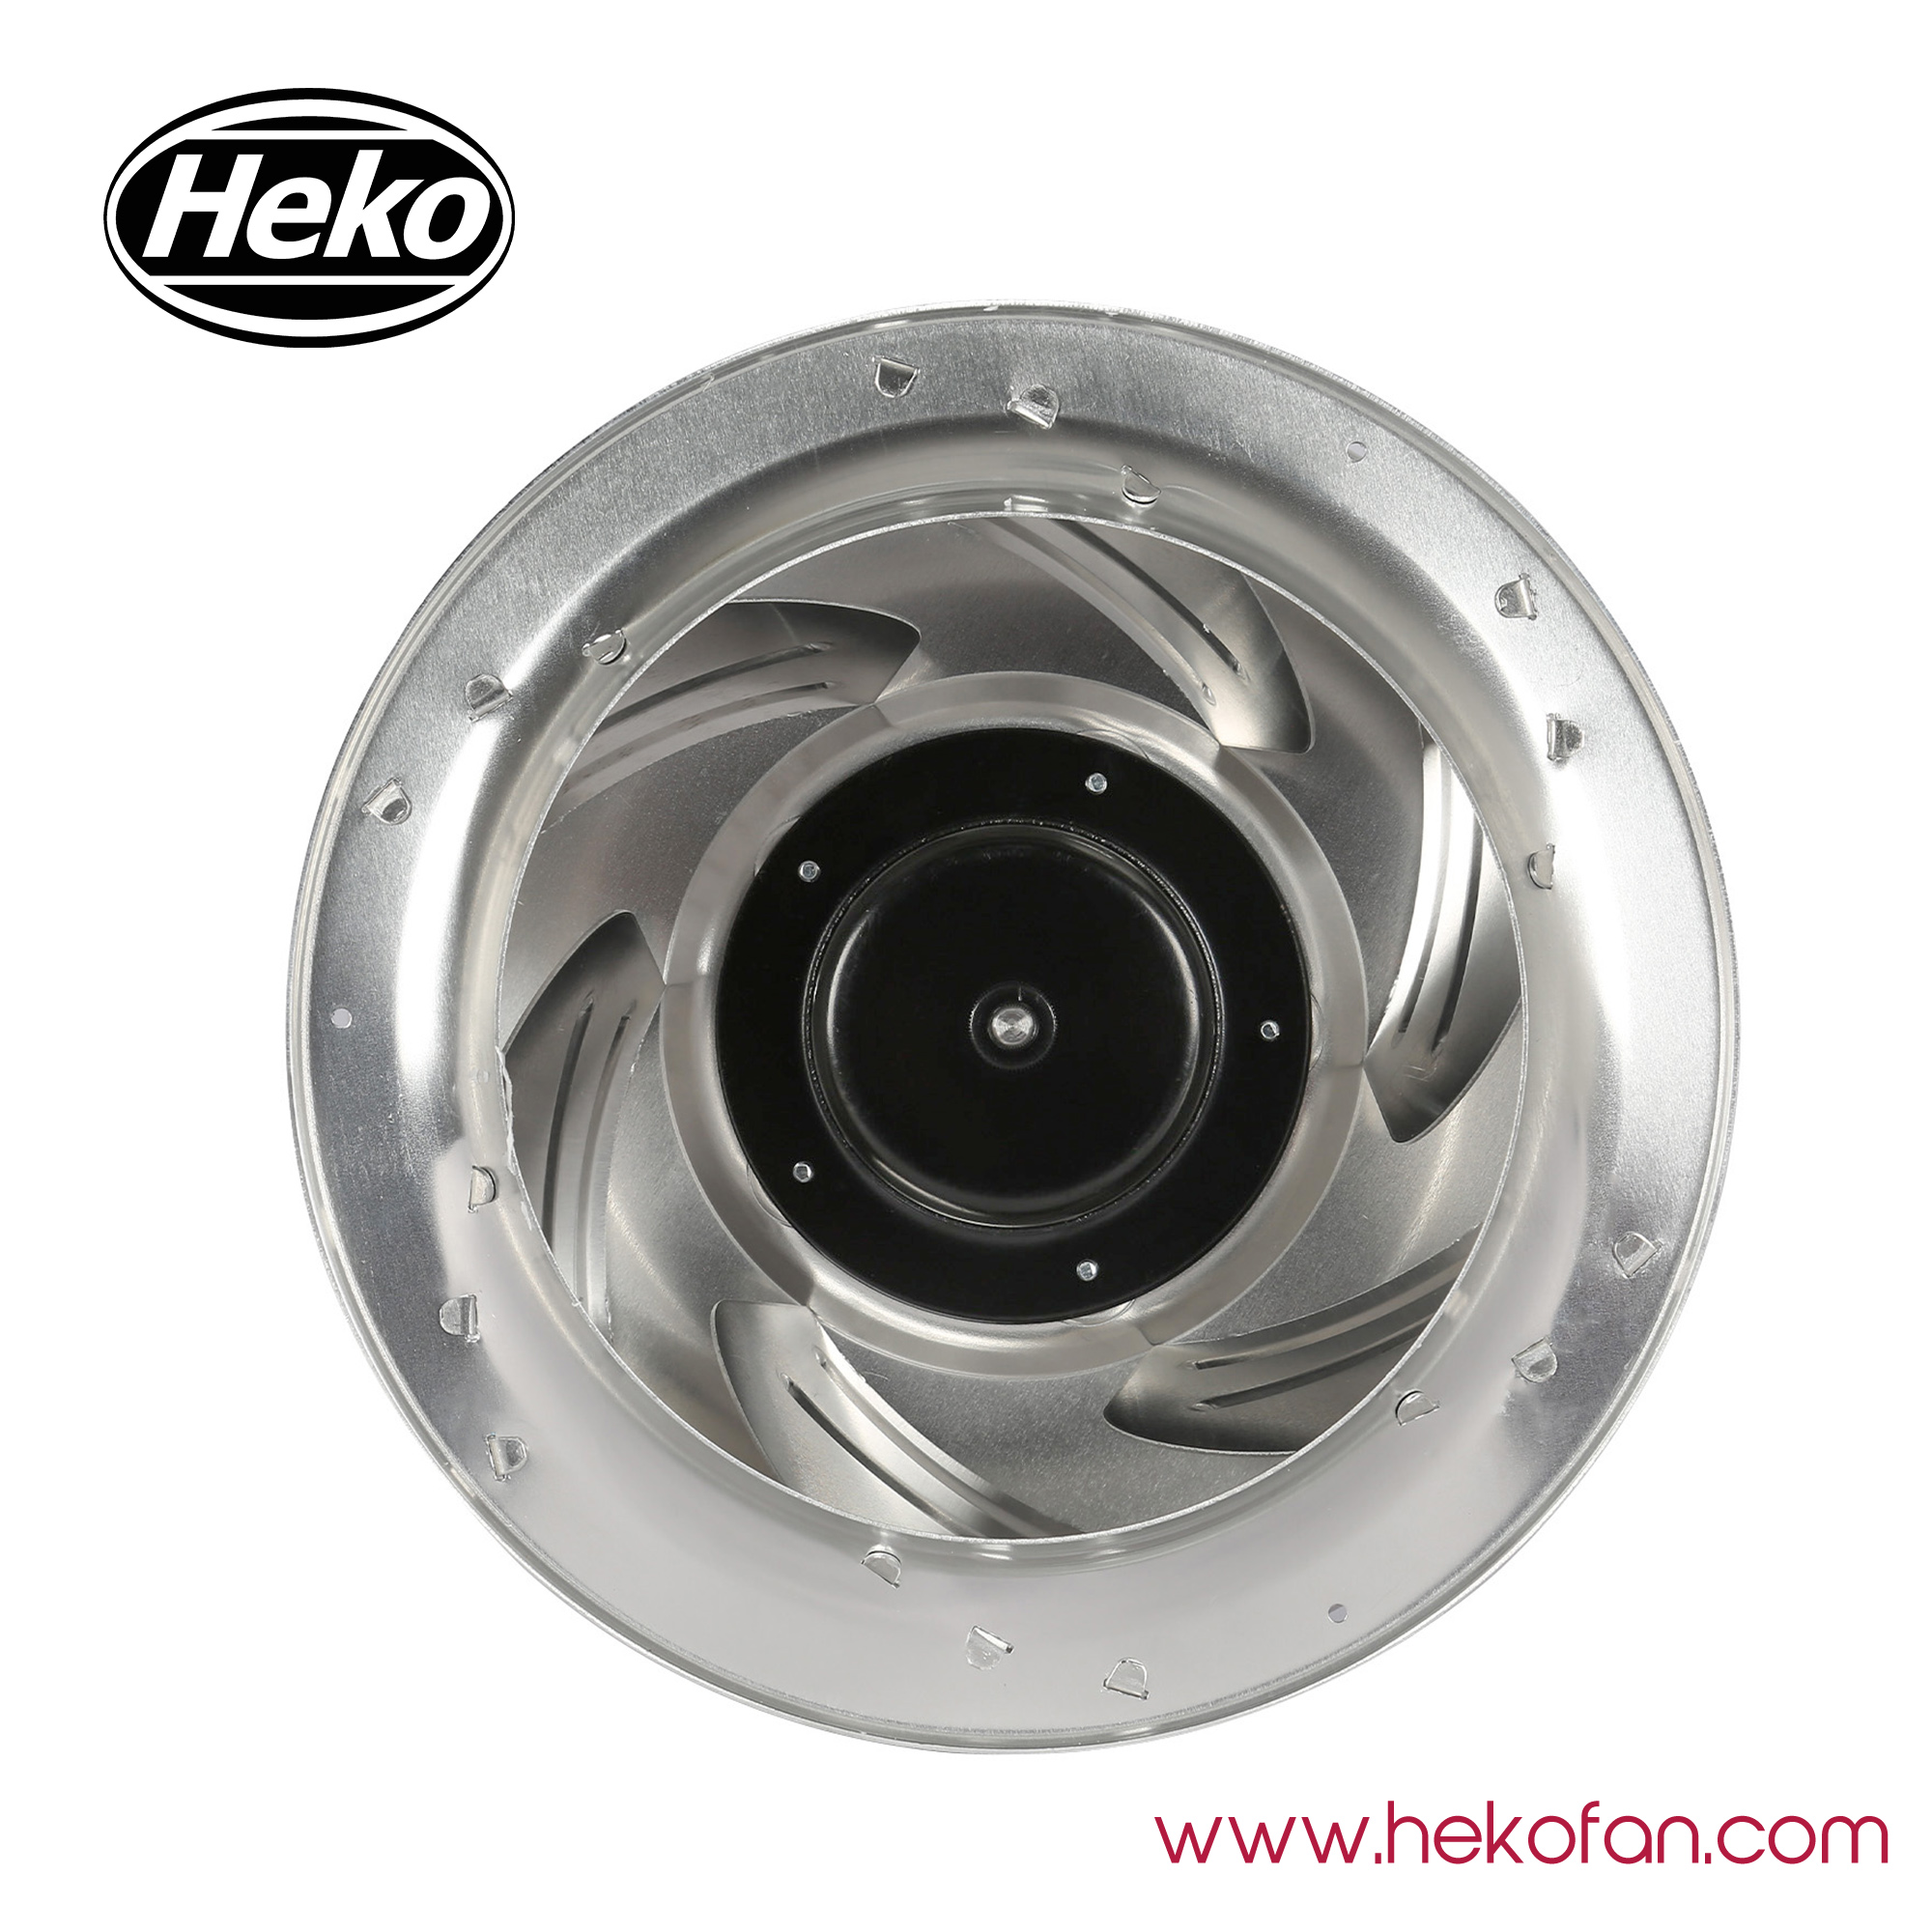 HEKO EC310mm 230VAC Backward Curved Centrifugal Fan 